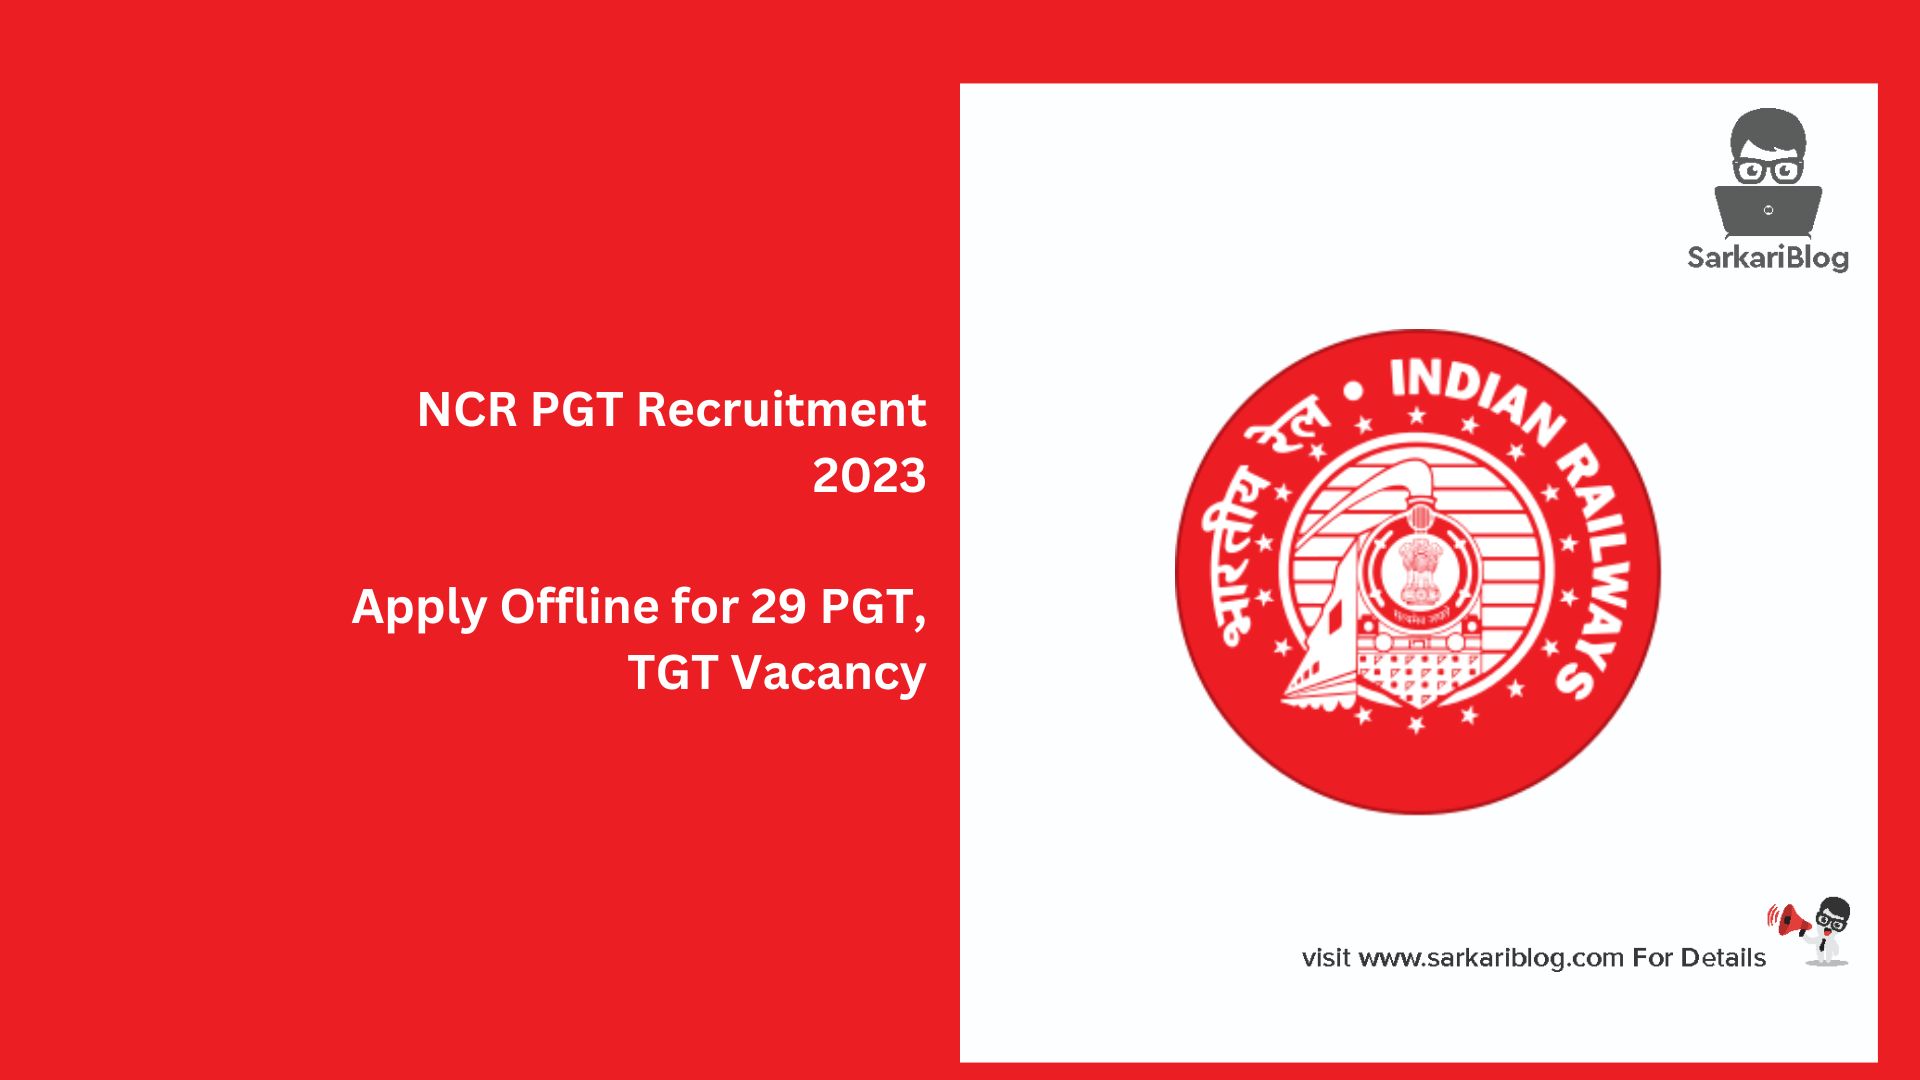 NCR PGT Recruitment 2023